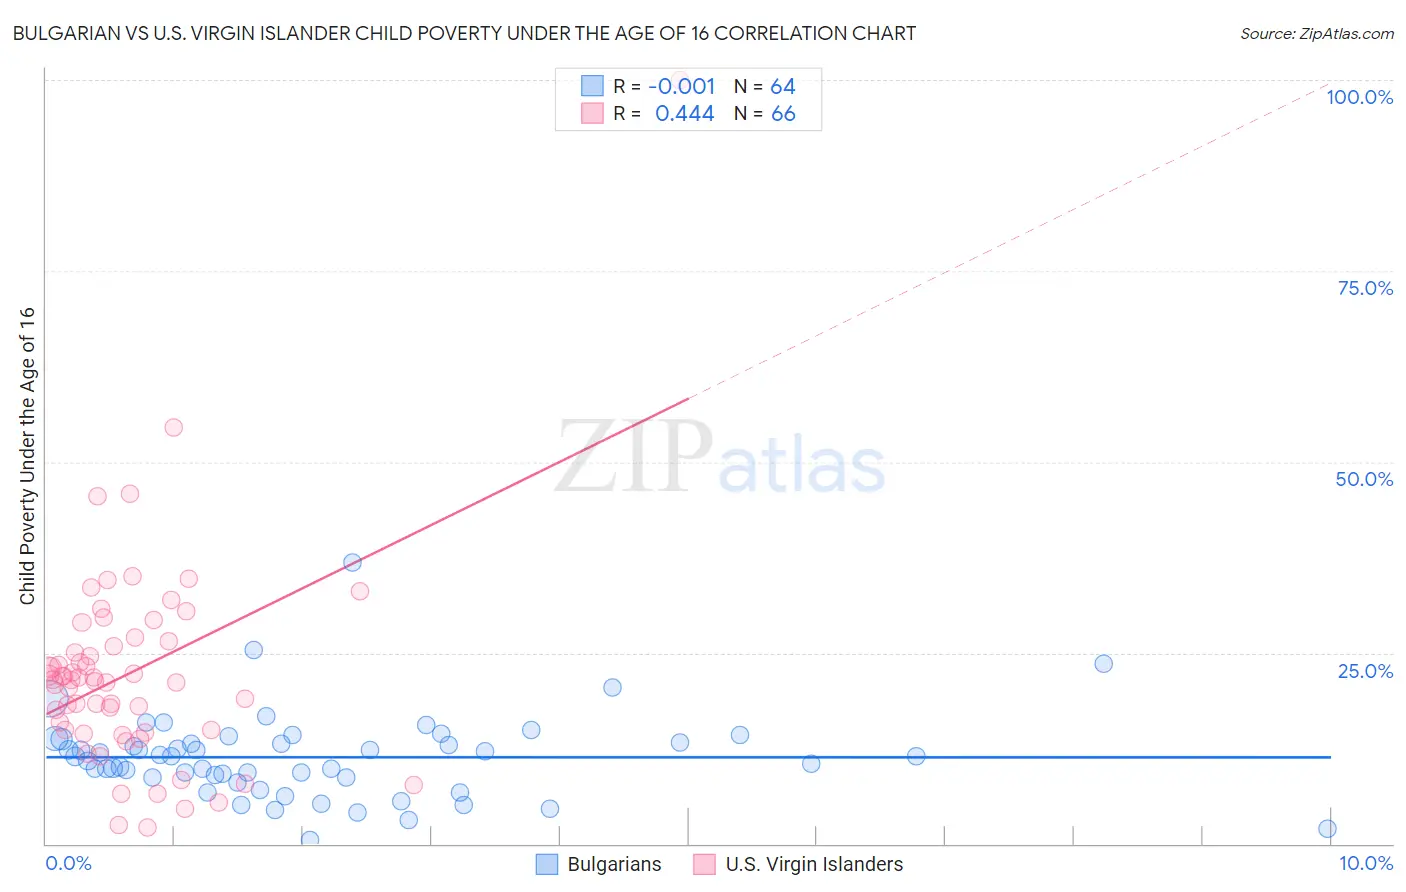 Bulgarian vs U.S. Virgin Islander Child Poverty Under the Age of 16